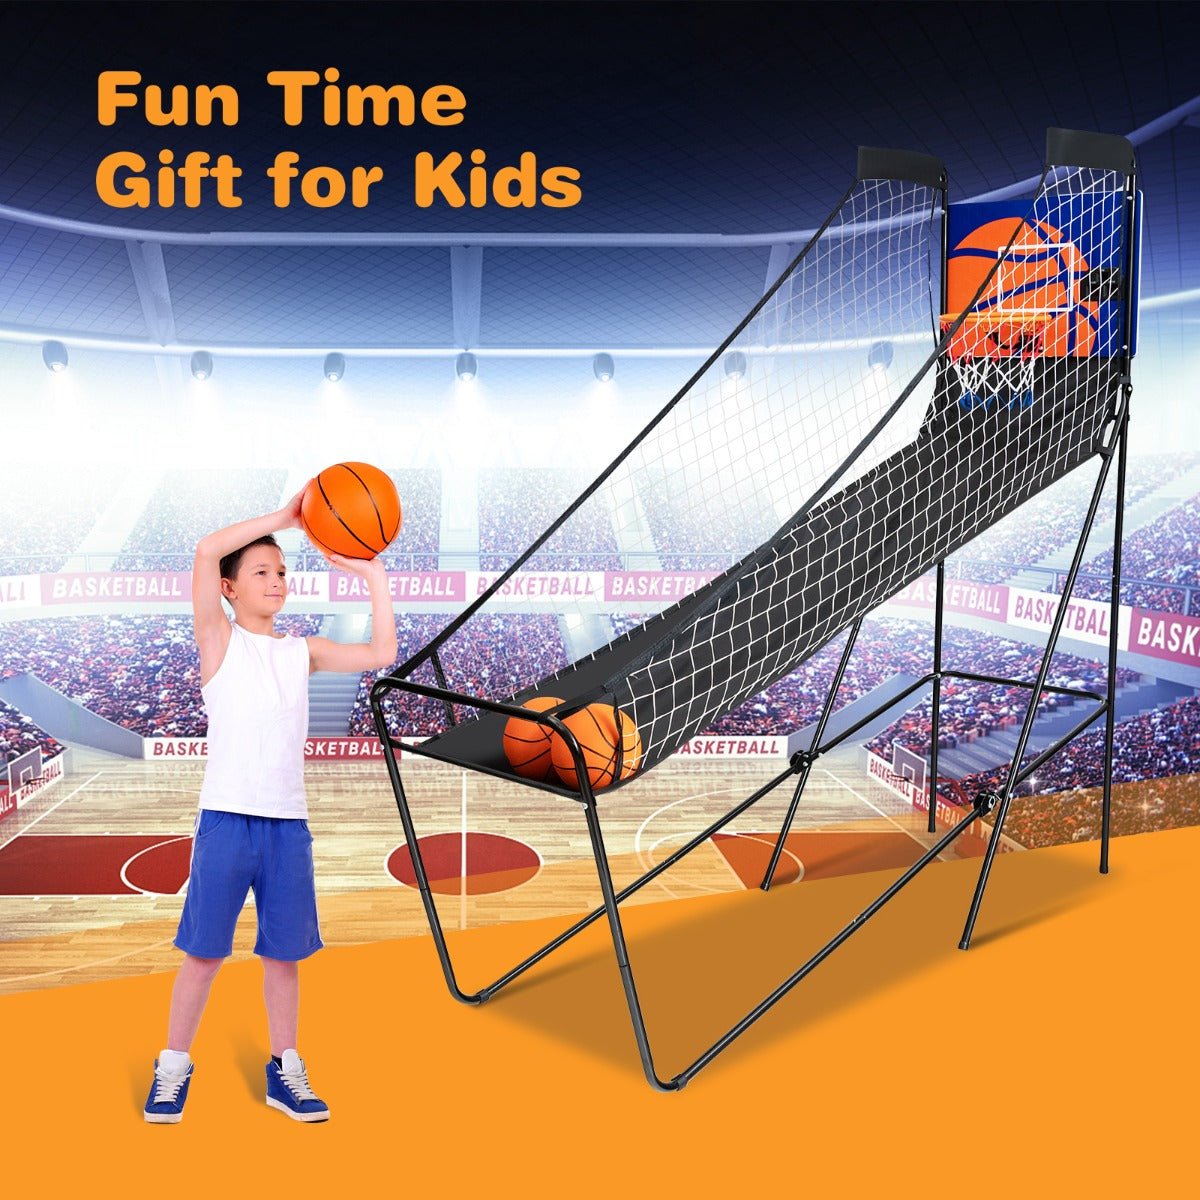 Portable Arcade Basketball Game: Electronic Scorer for Family Play